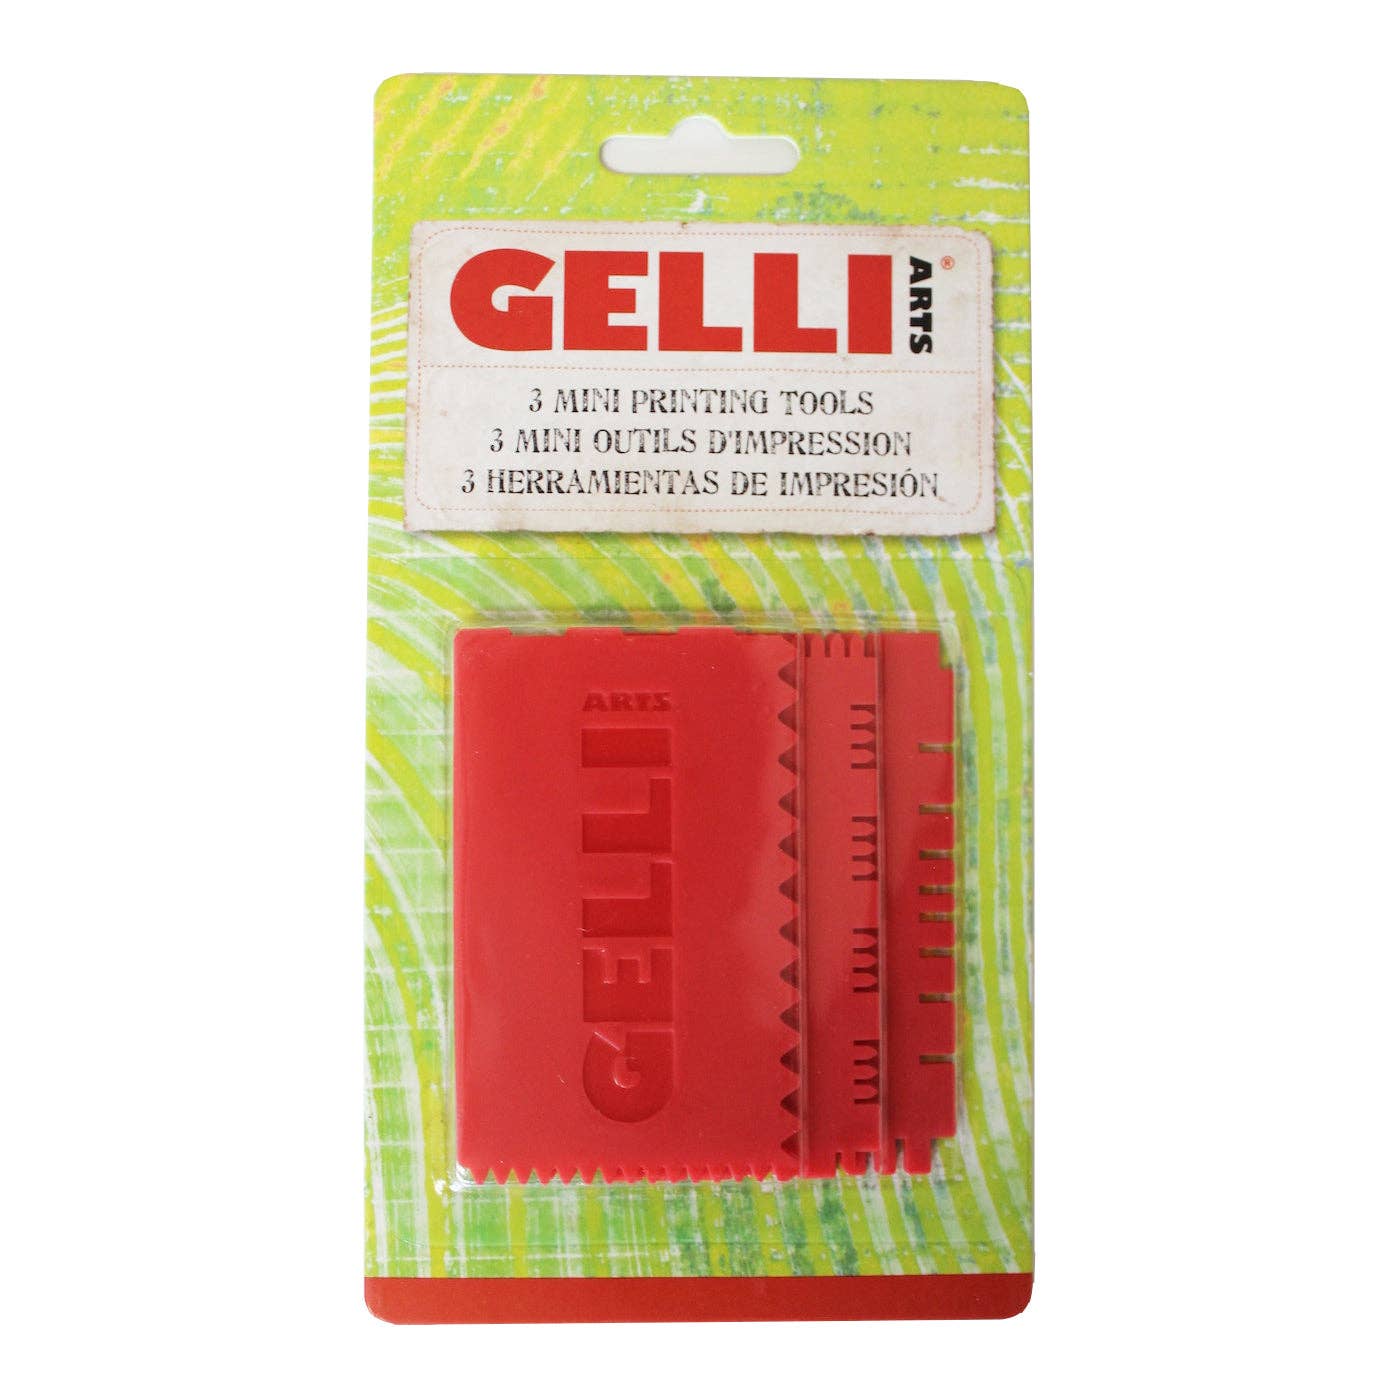 Gelli Arts - NEW!! Mini Printing Tools - Set of 3